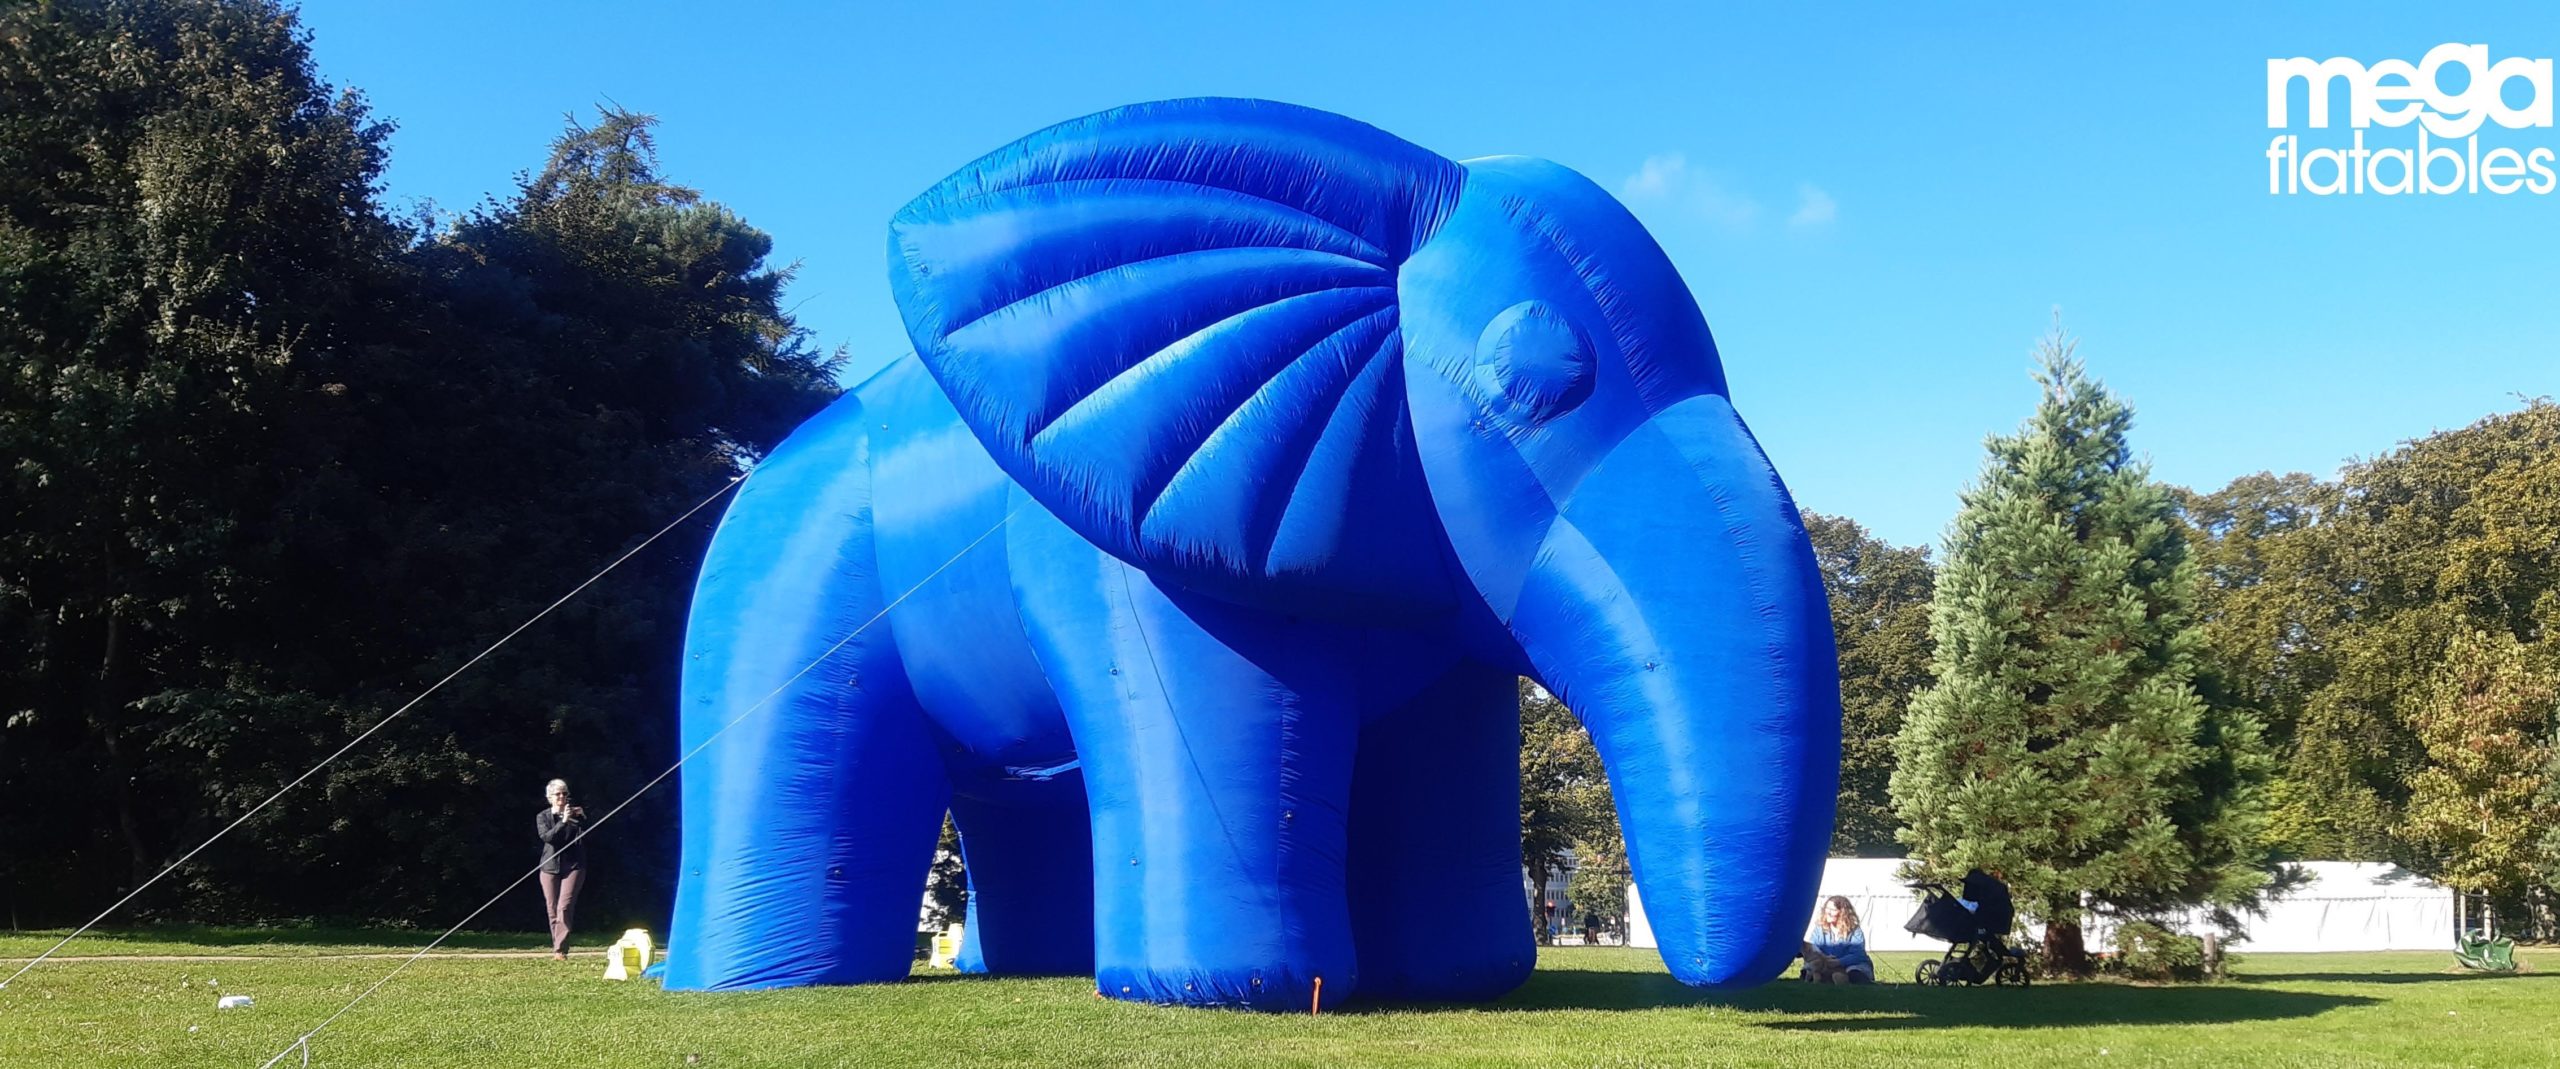 Giant inflatable elephant